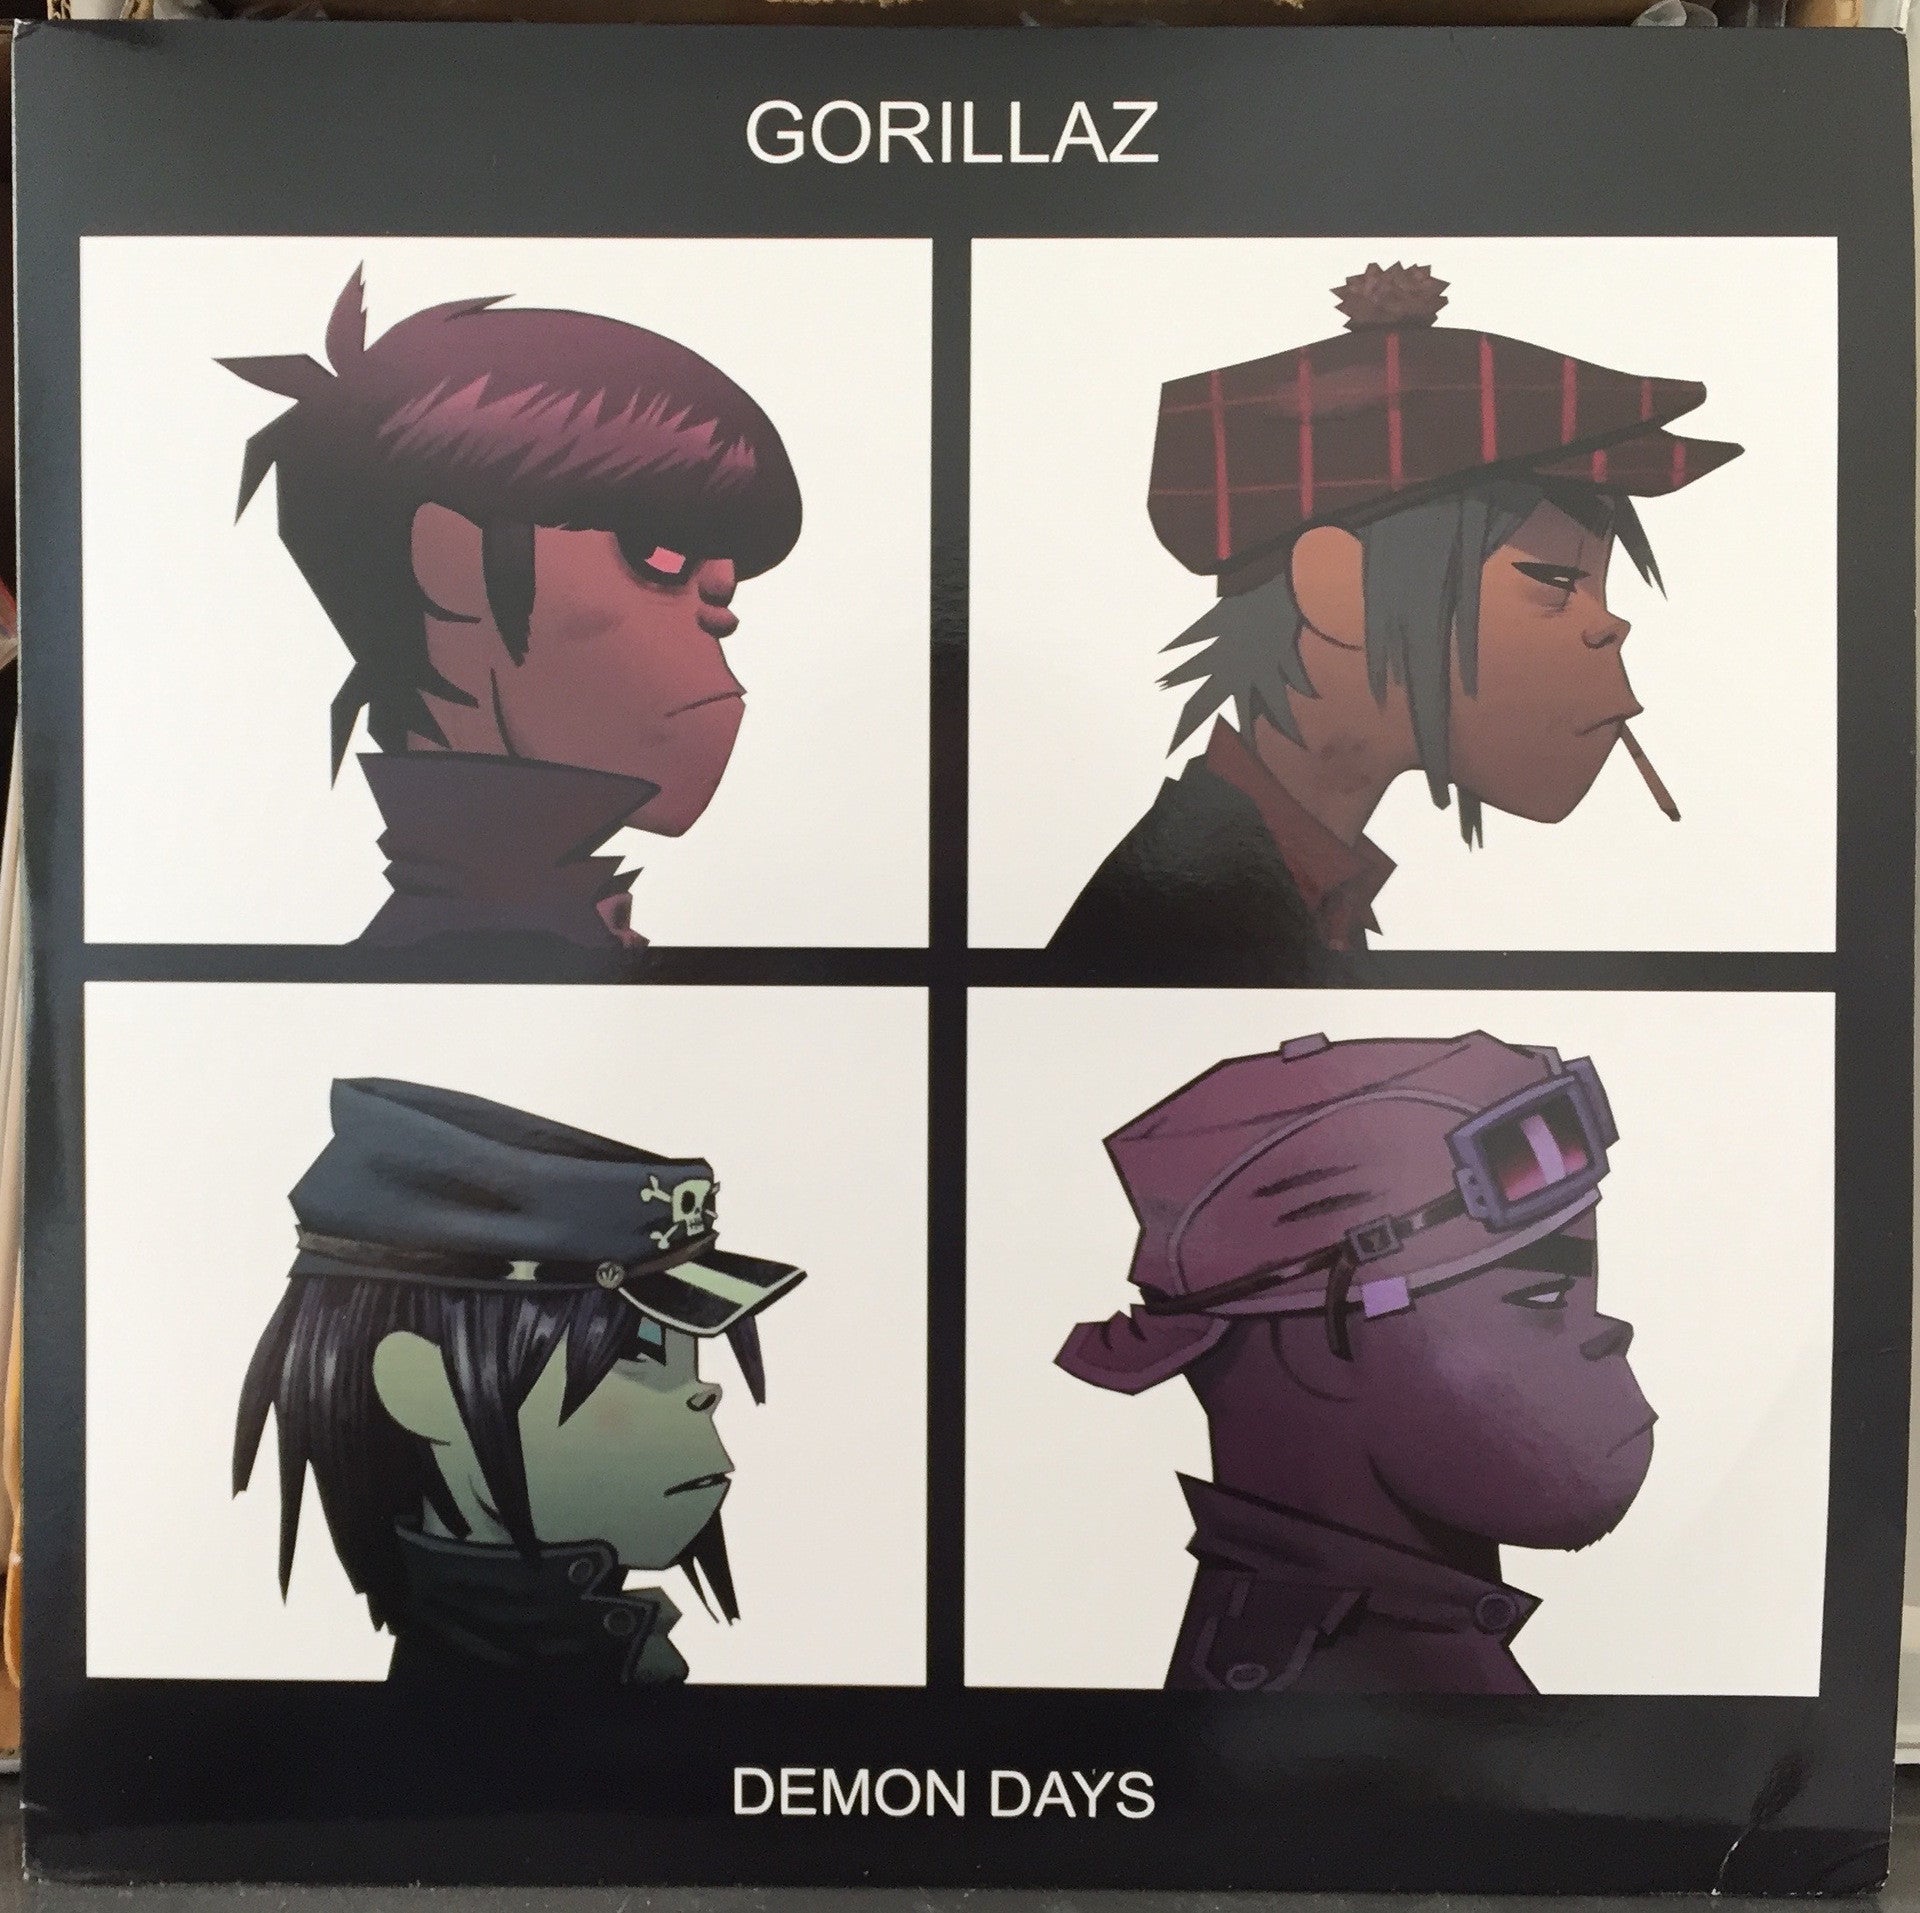 Gorillaz ‎– Demon Days (2005) - New 2 Lp Record 2018 Parlophone Europe Vinyl - Rock / Trip Hop / Hip Hop / Pop